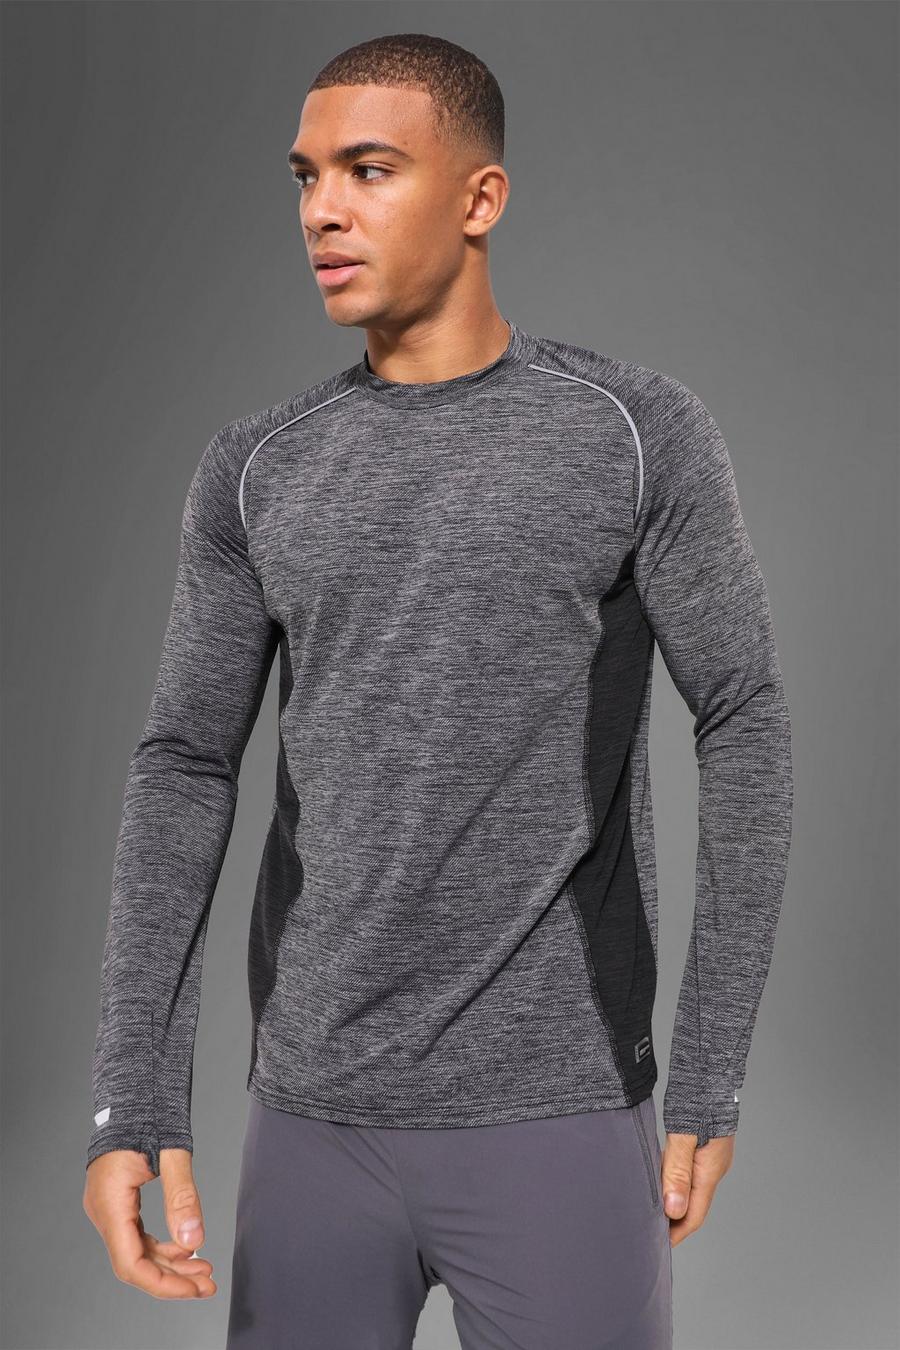 Man Active Fitness Long Sleeve Top aus leichtem Gewebe, Anthrazit grey